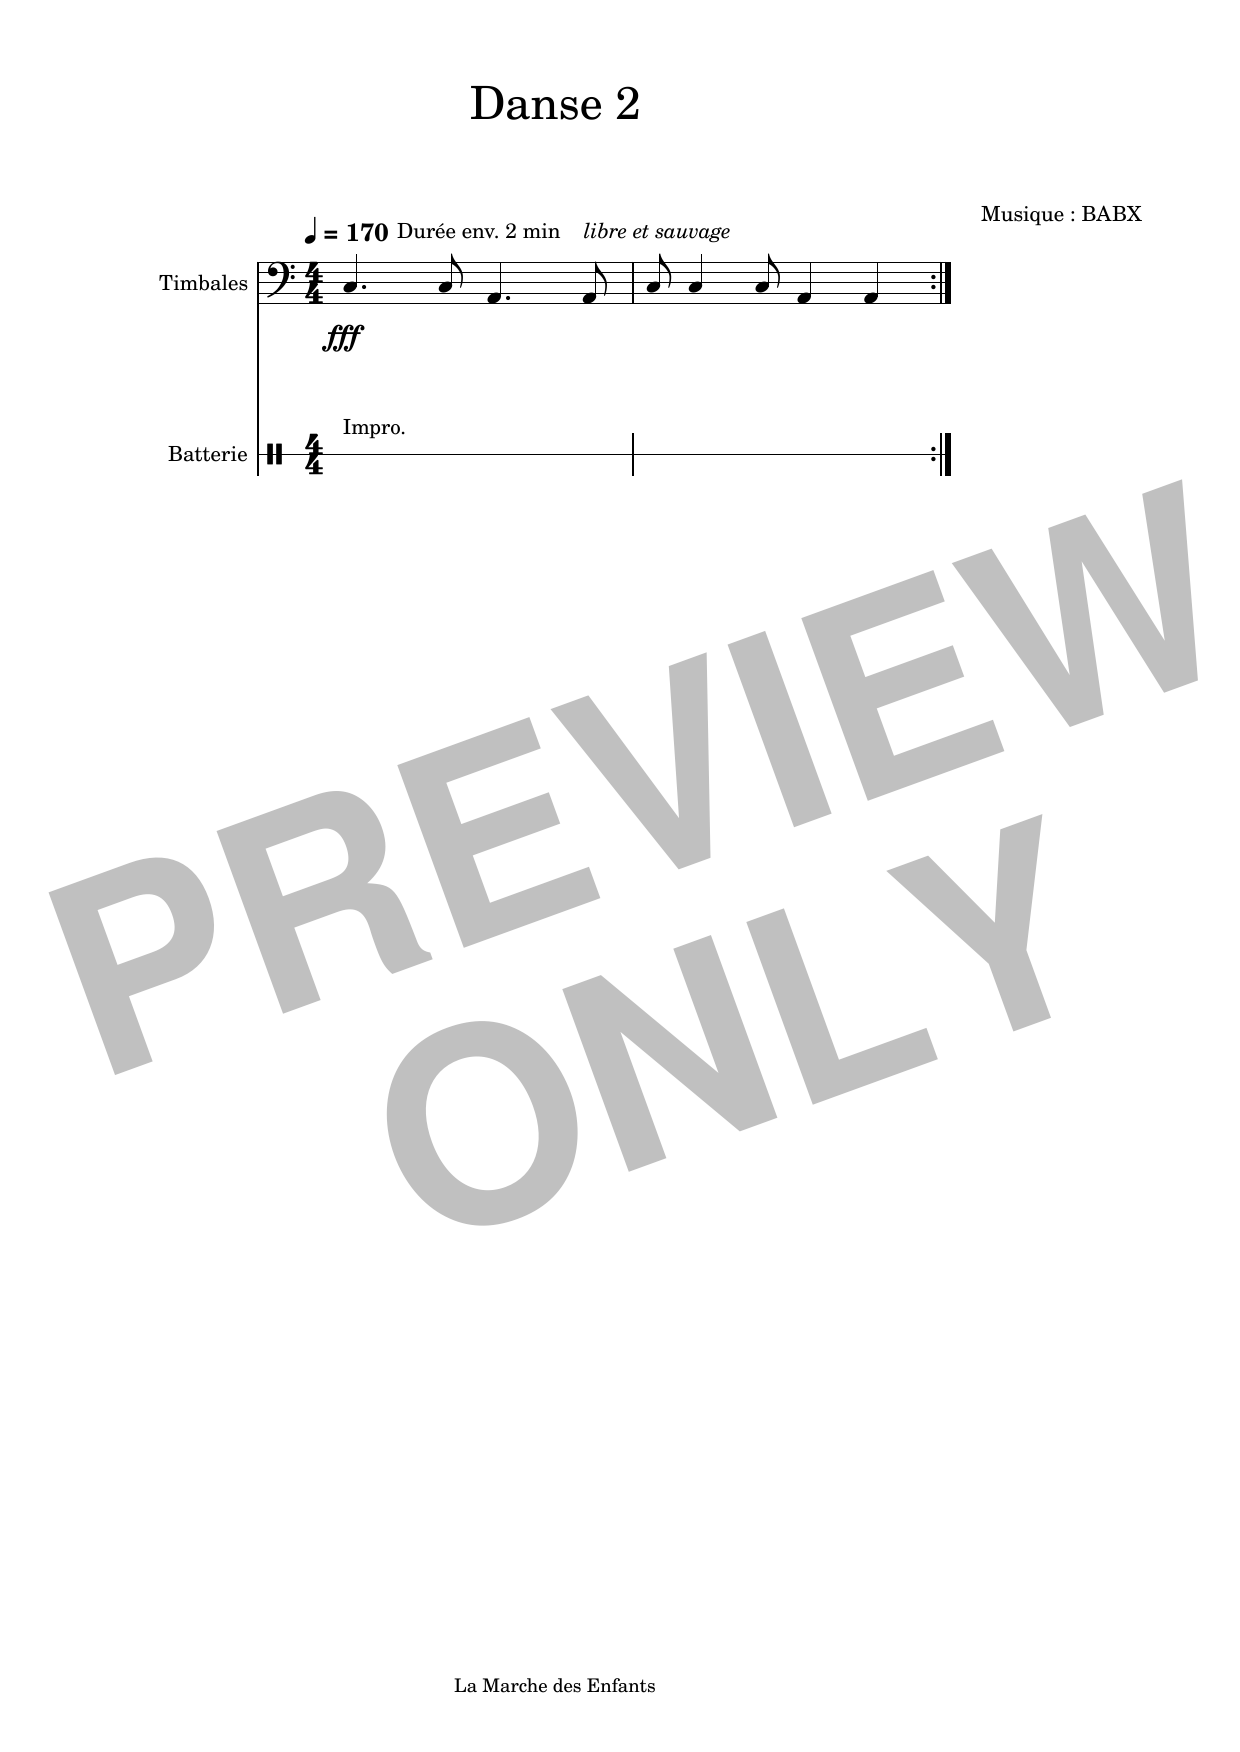 David Babin (Babx) Danse 2 Sheet Music Notes & Chords for Percussion Ensemble - Download or Print PDF